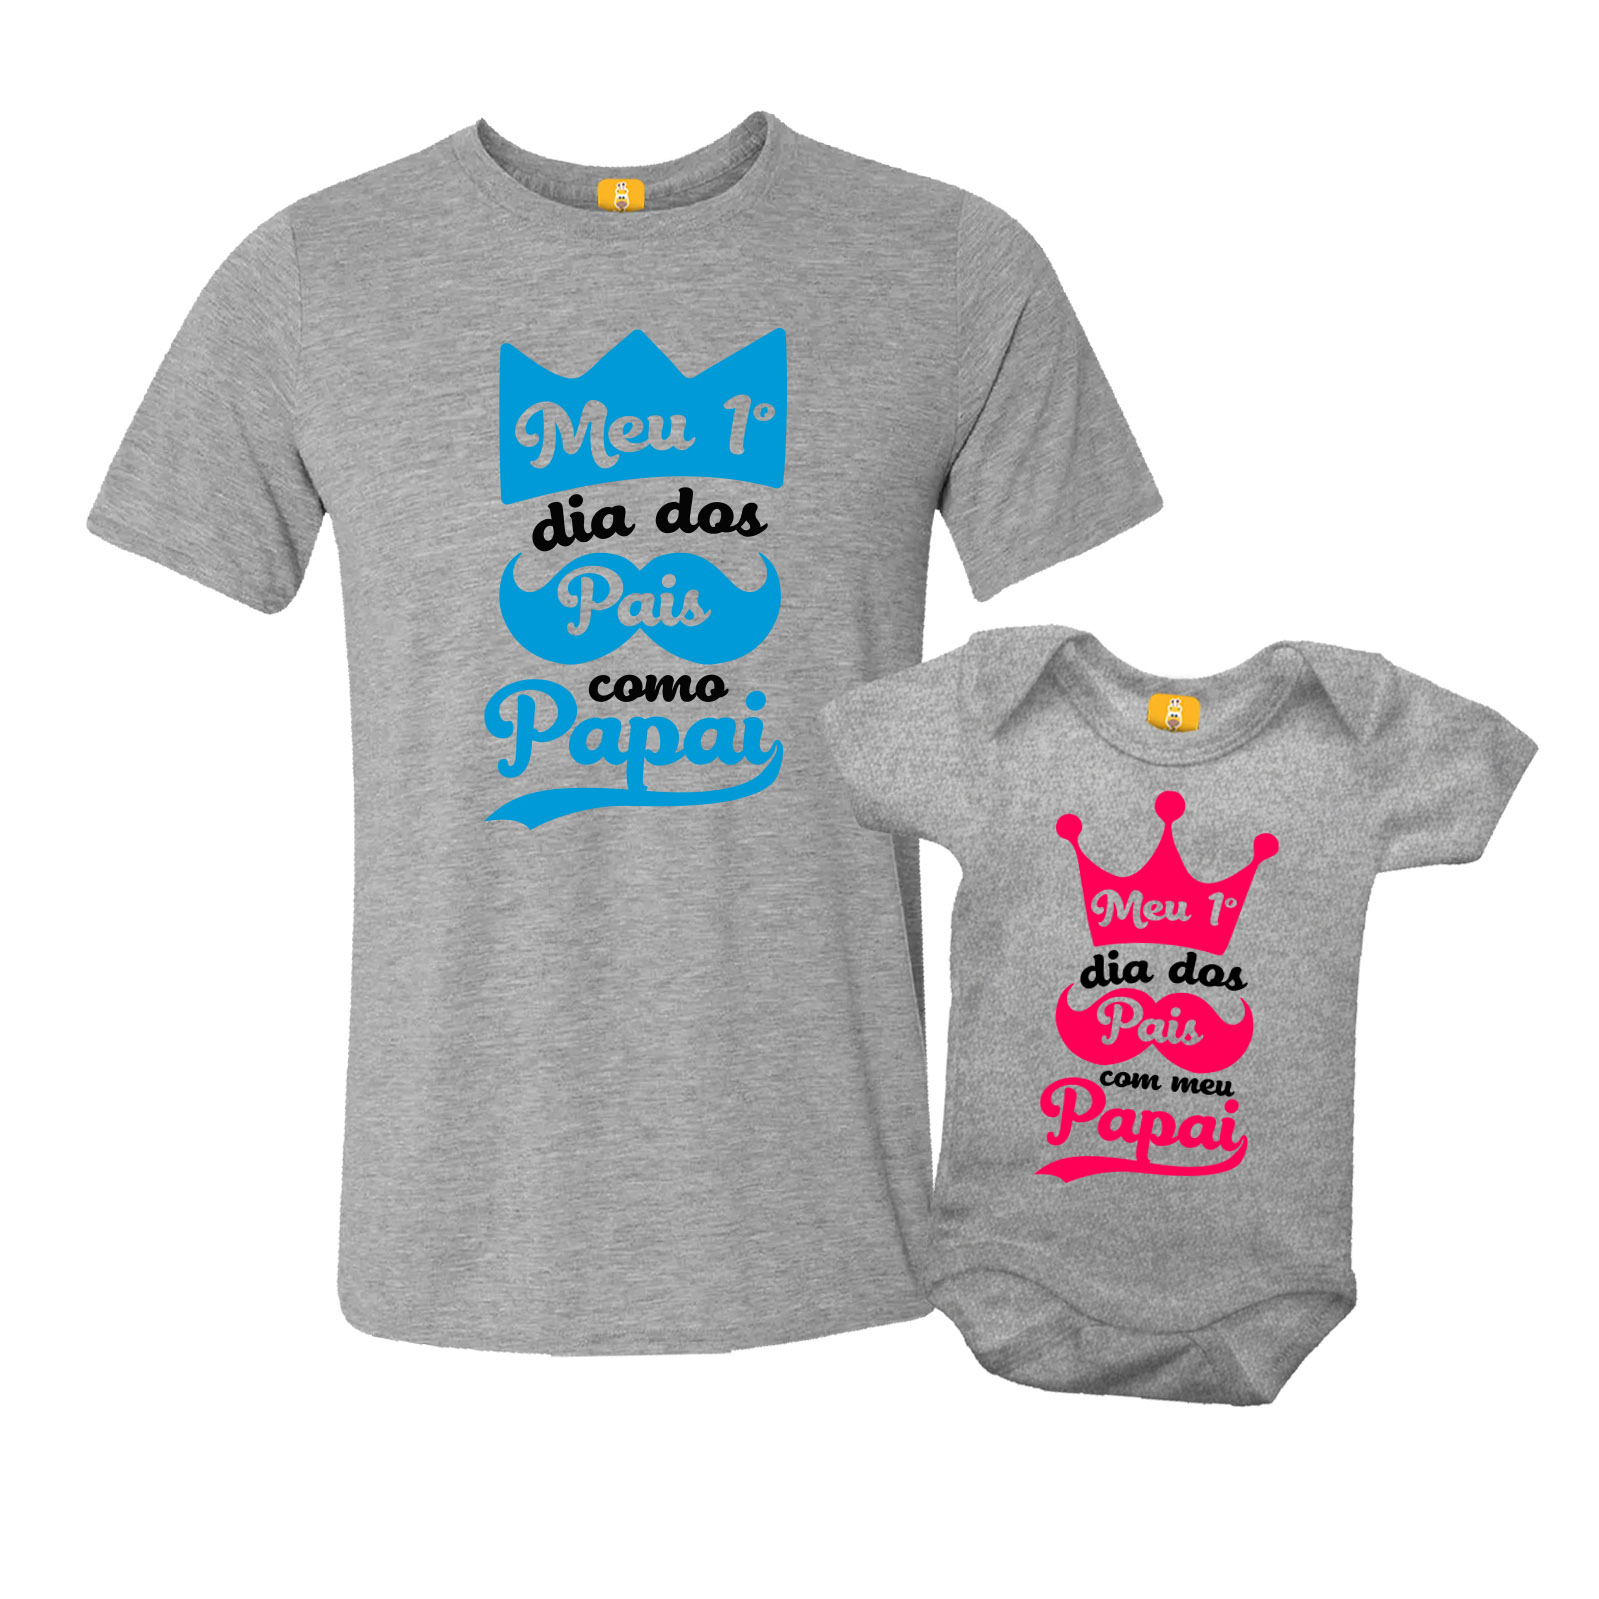 Kit Camiseta e Body - Meu primeiro dia dos Pais como Papai - Realeza 2 Peças - CINZA